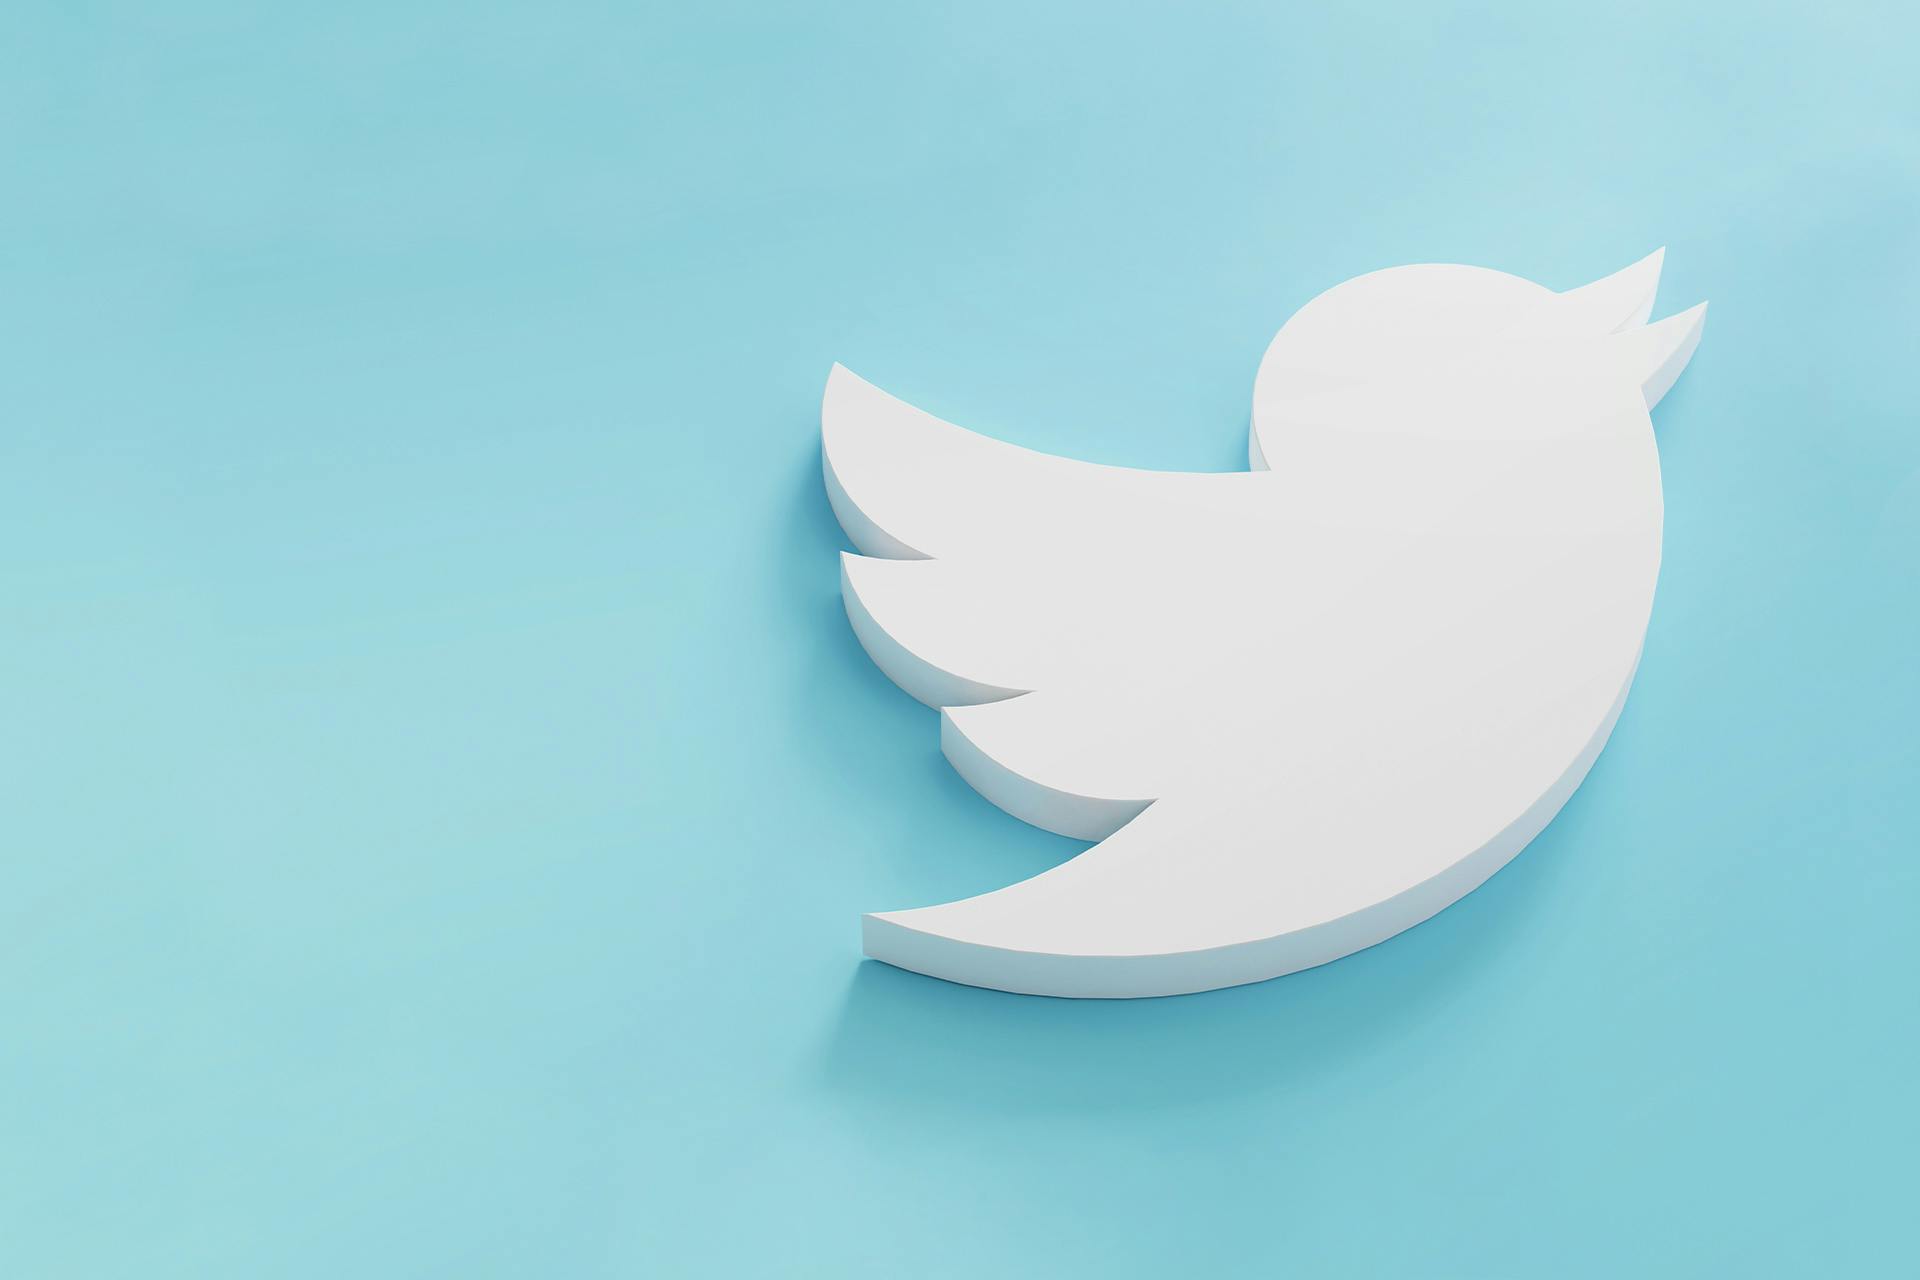 White Twitter bird over light blue background. Twitter marketing strategy blog.